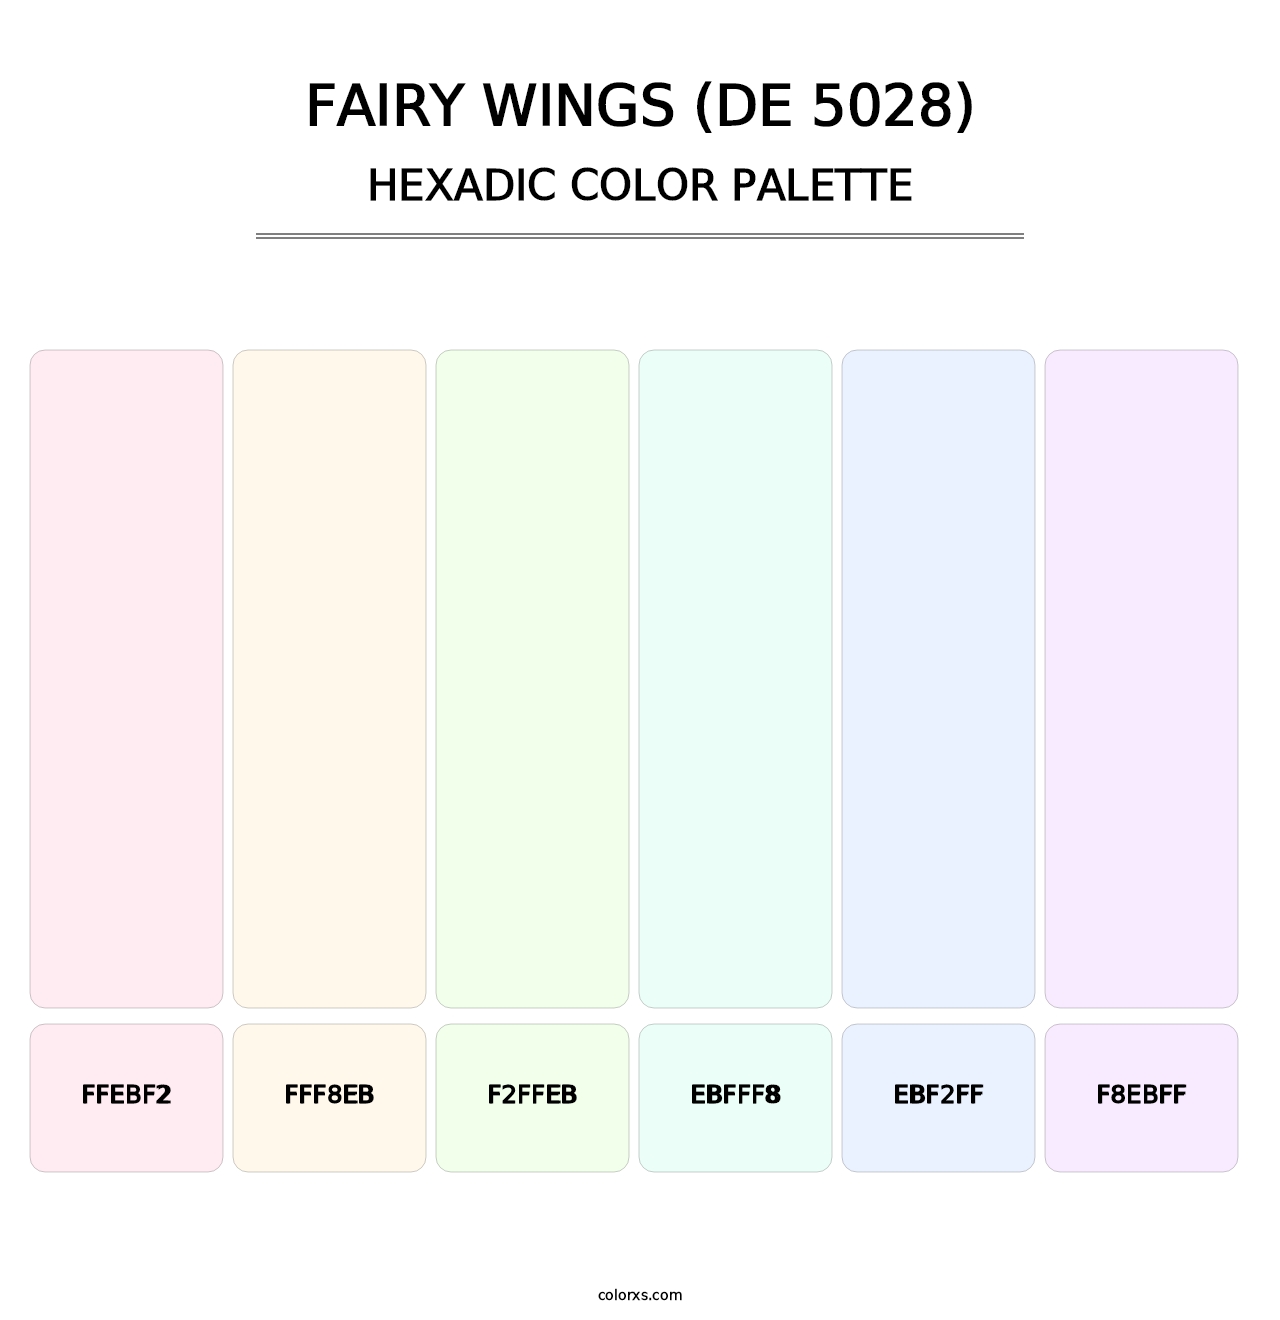 Fairy Wings (DE 5028) - Hexadic Color Palette